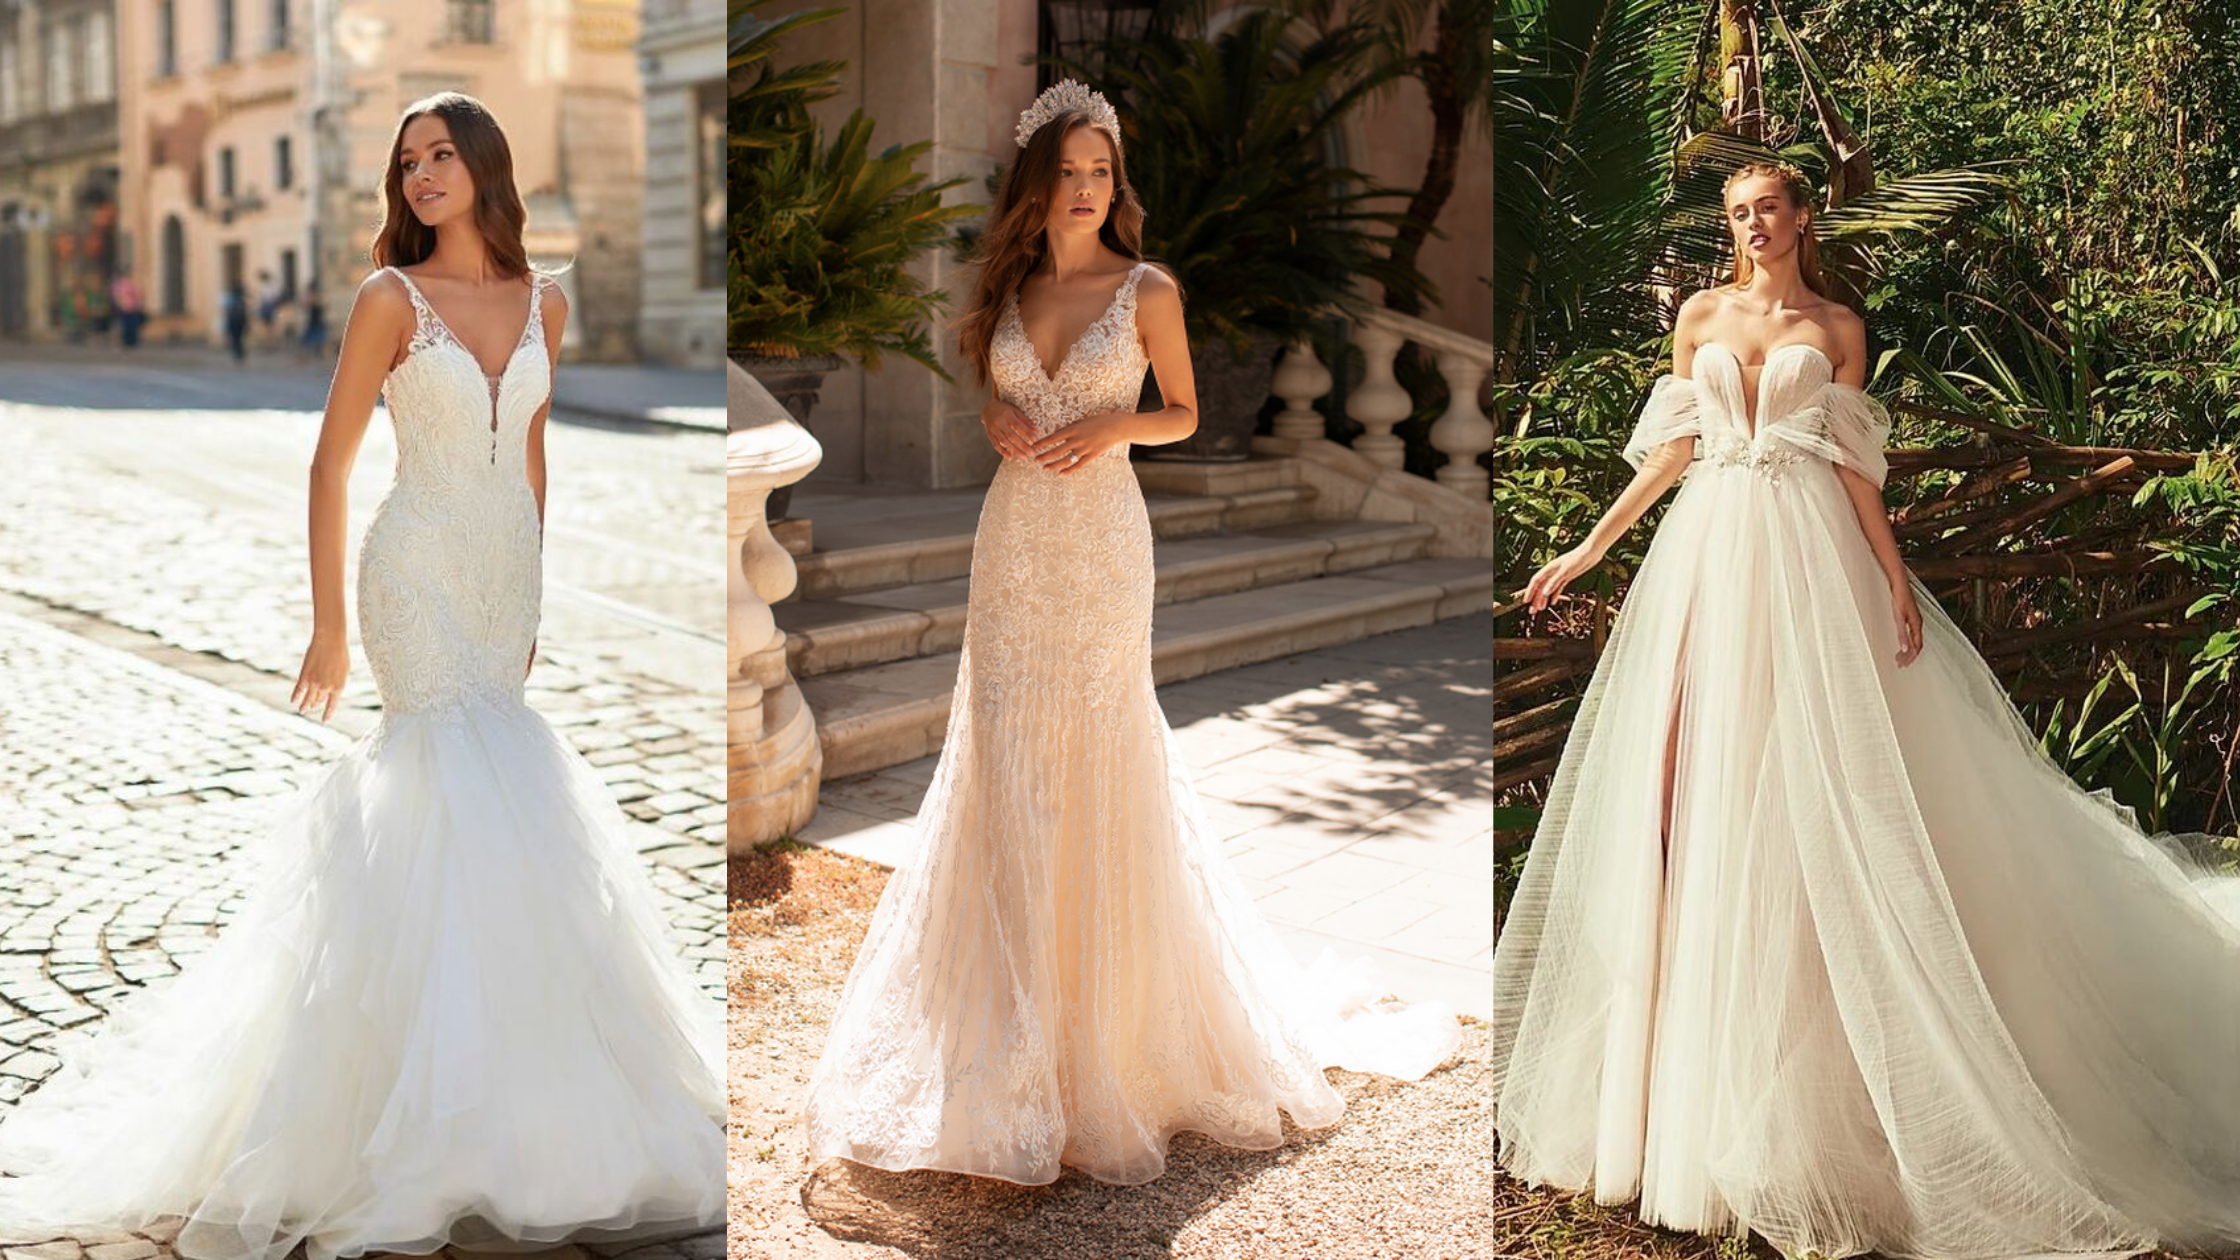 Choosing Your Wedding Dress Fabric